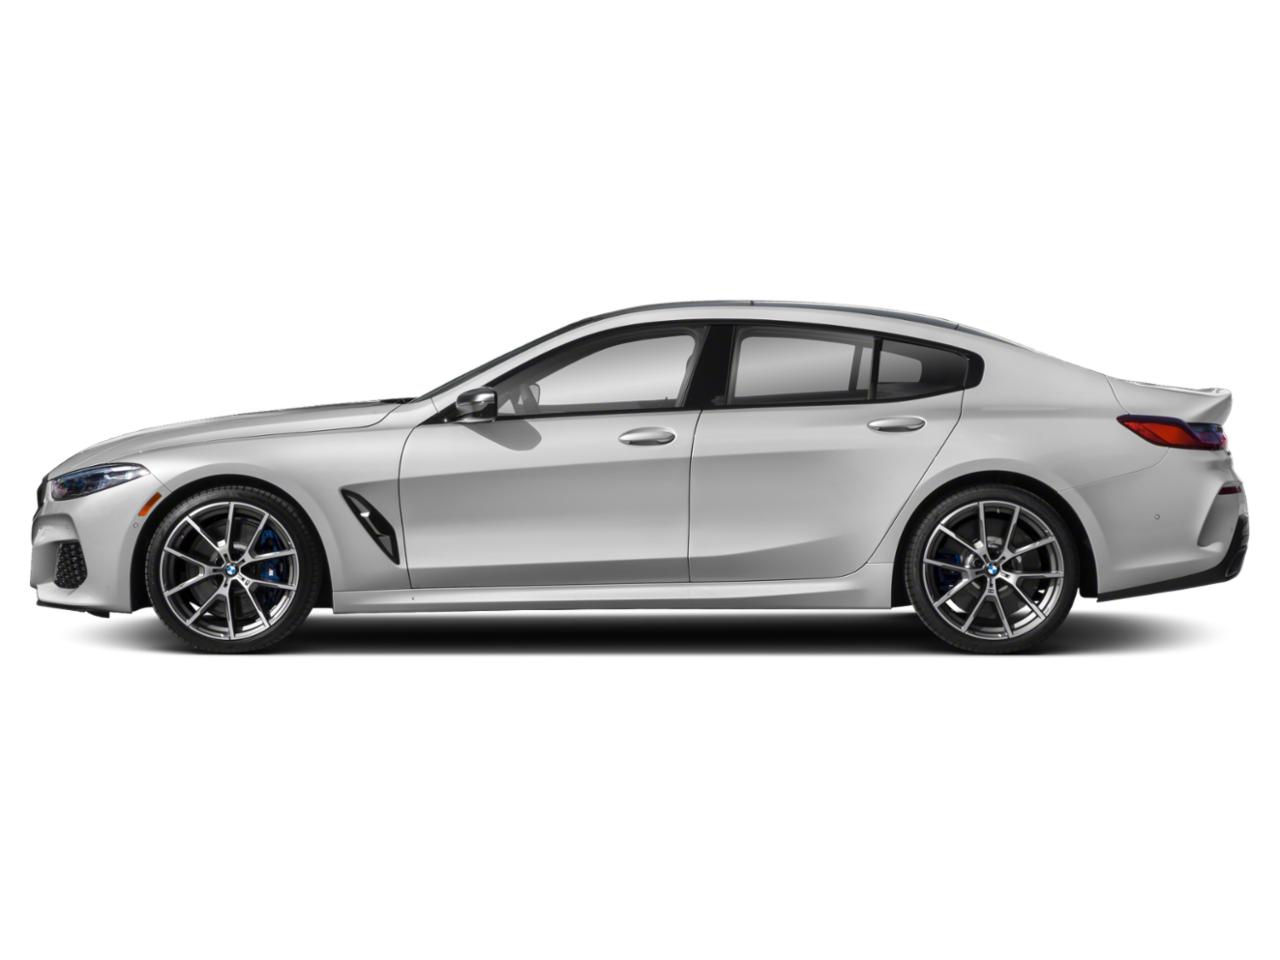 New 2021 BMW M850i Bluestone Metallic: Car for Sale ...